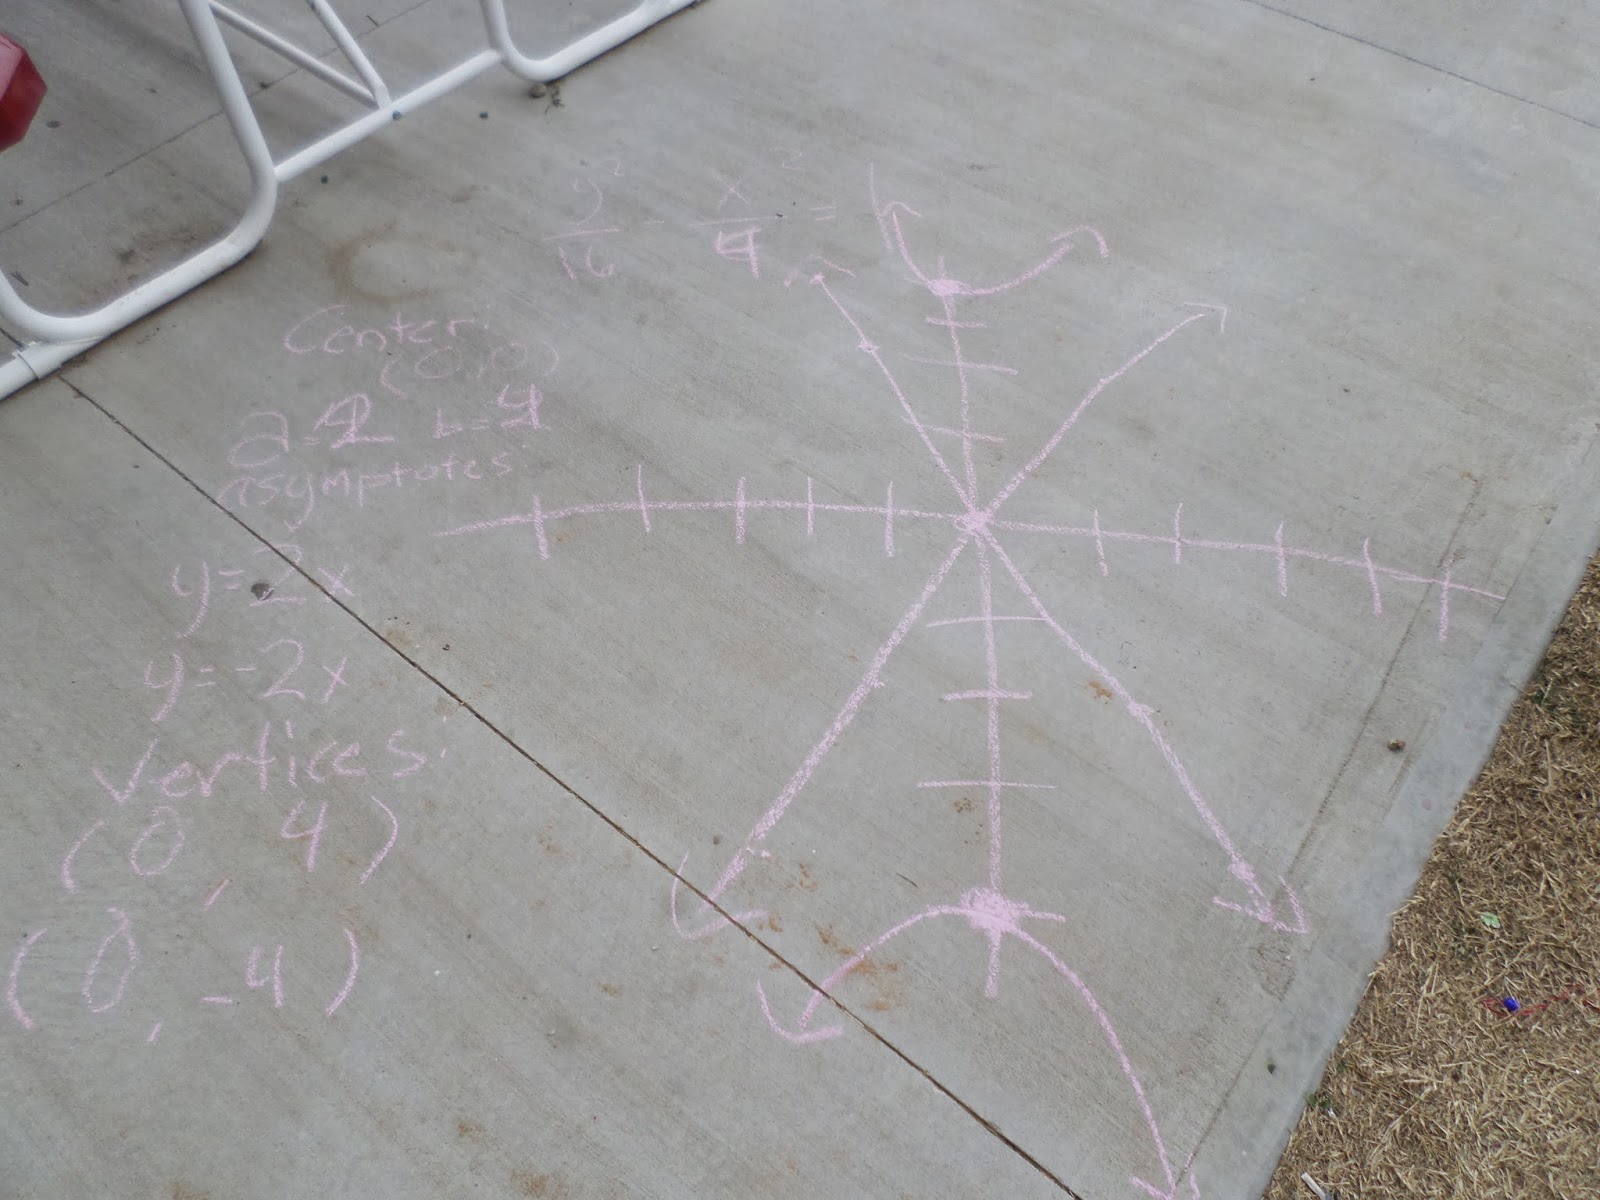 sidewalk chalk hyperbolas conics conic sections